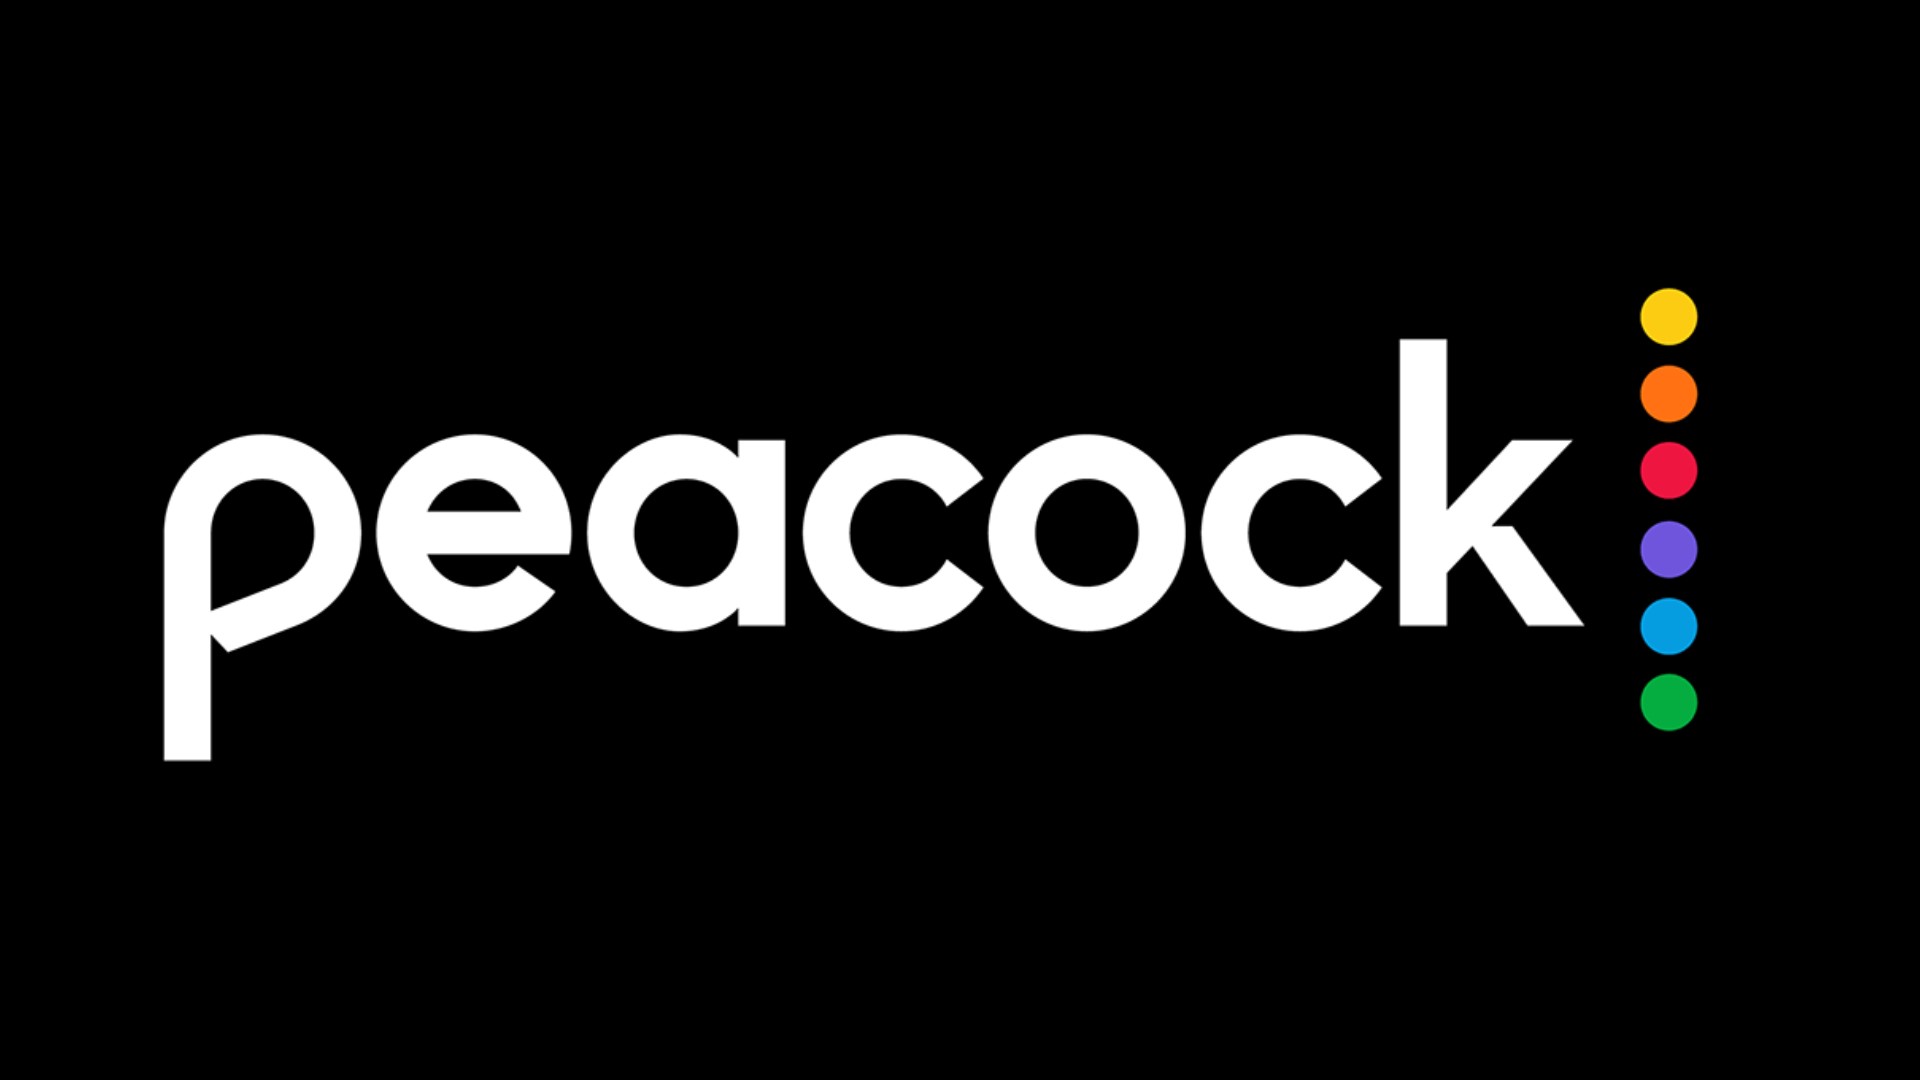 Peacock logo is big